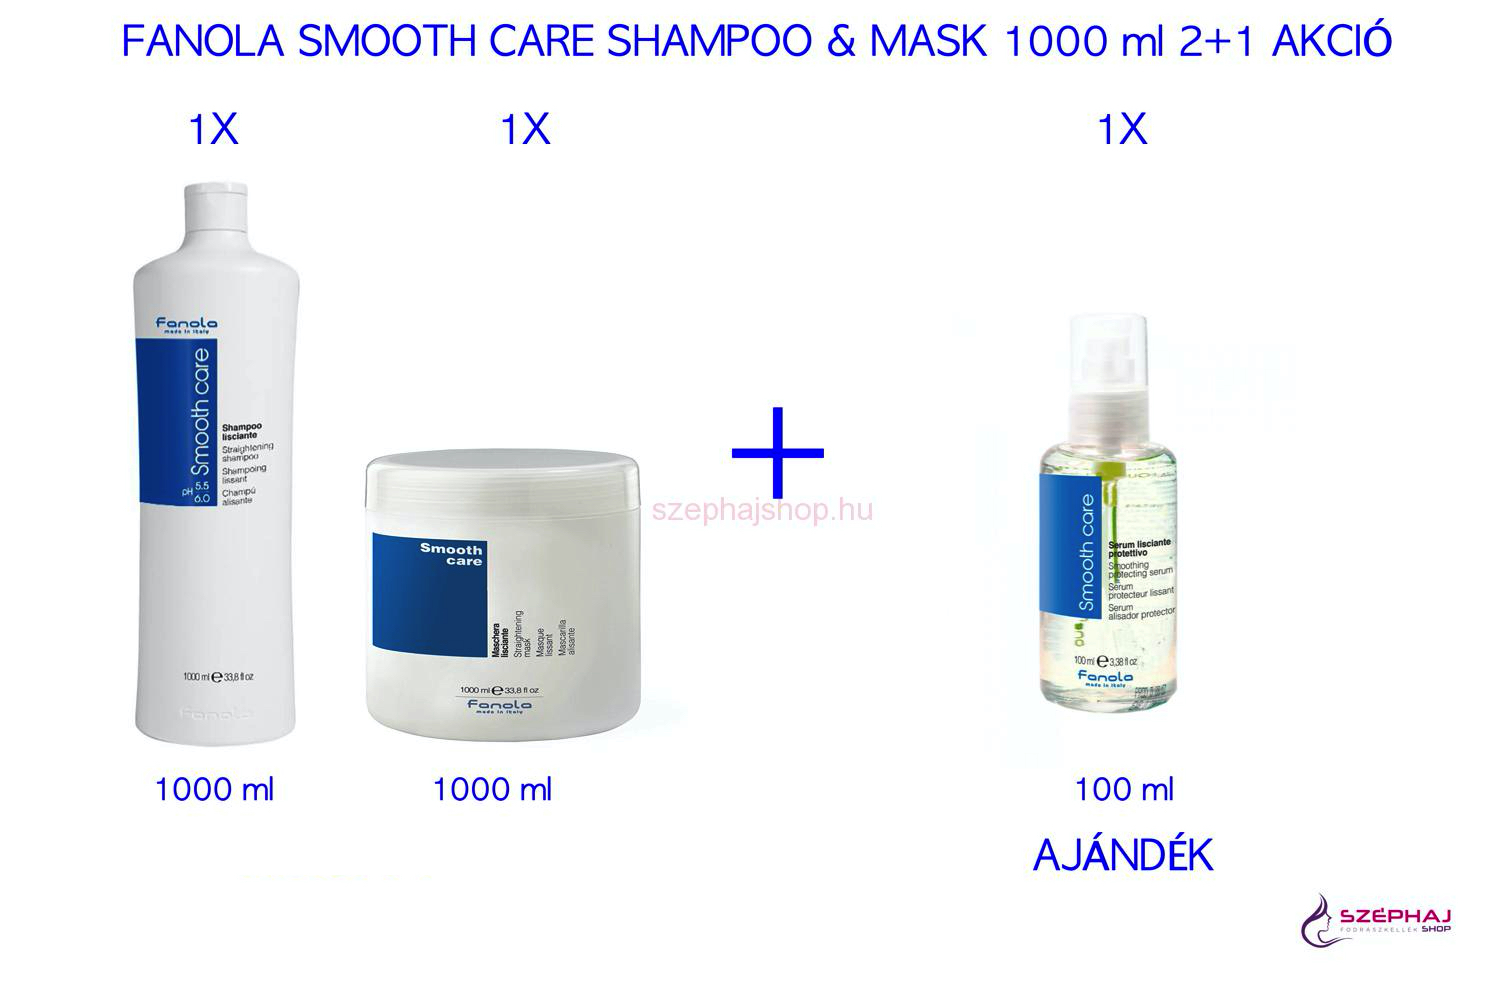 FANOLA Smooth Care Shampoo & Mask 1000 ml 2+1 AKCIÓ